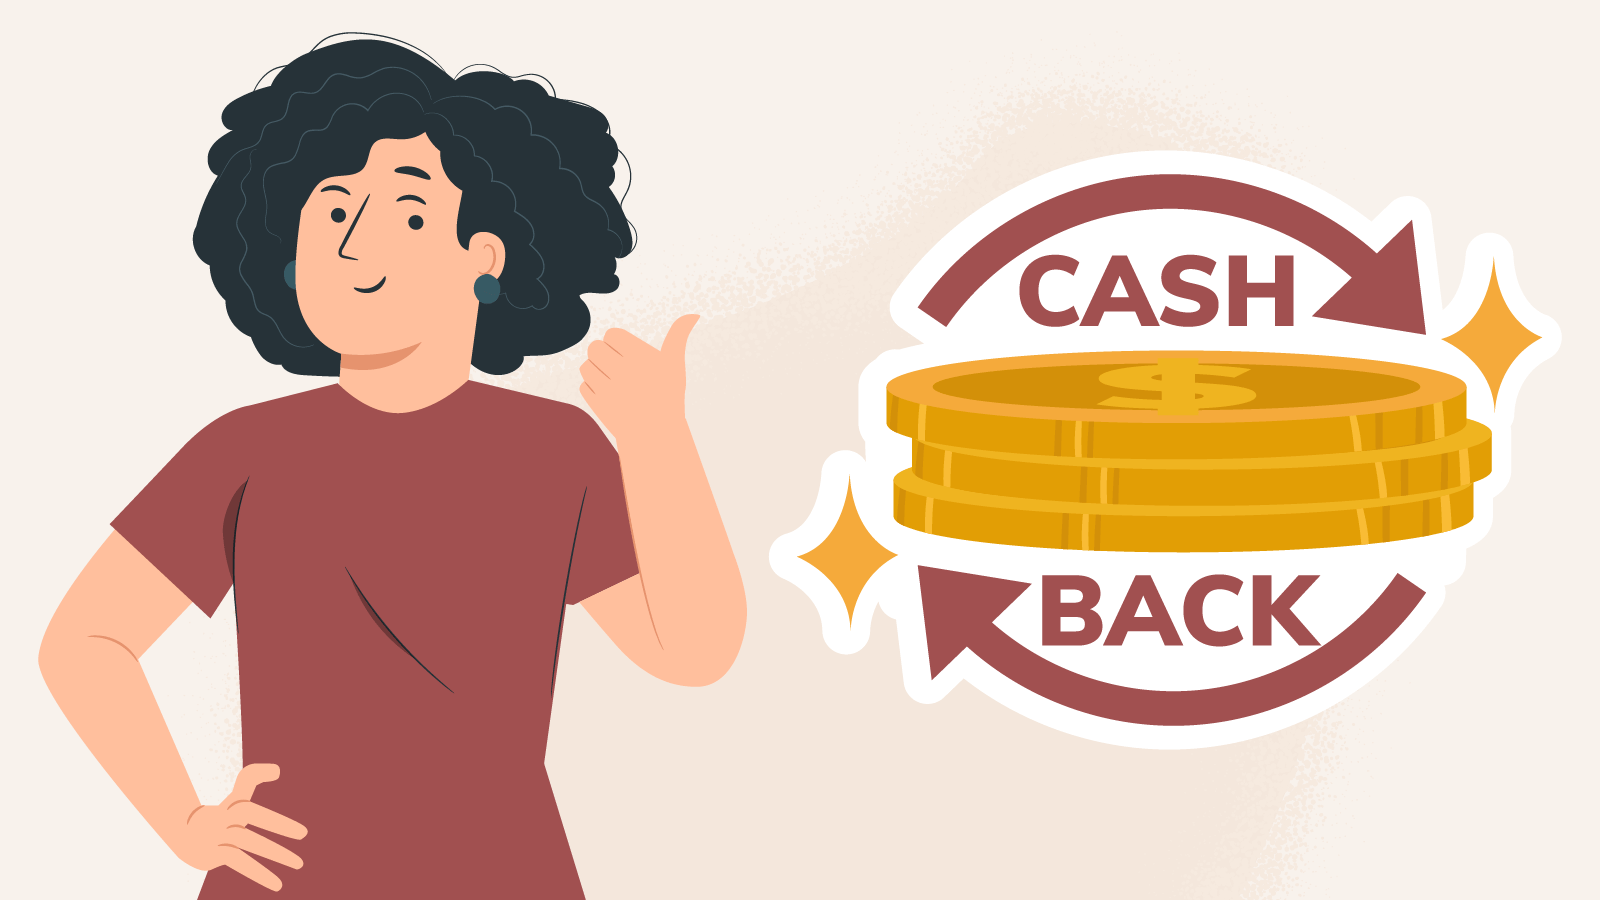 Cashback offers